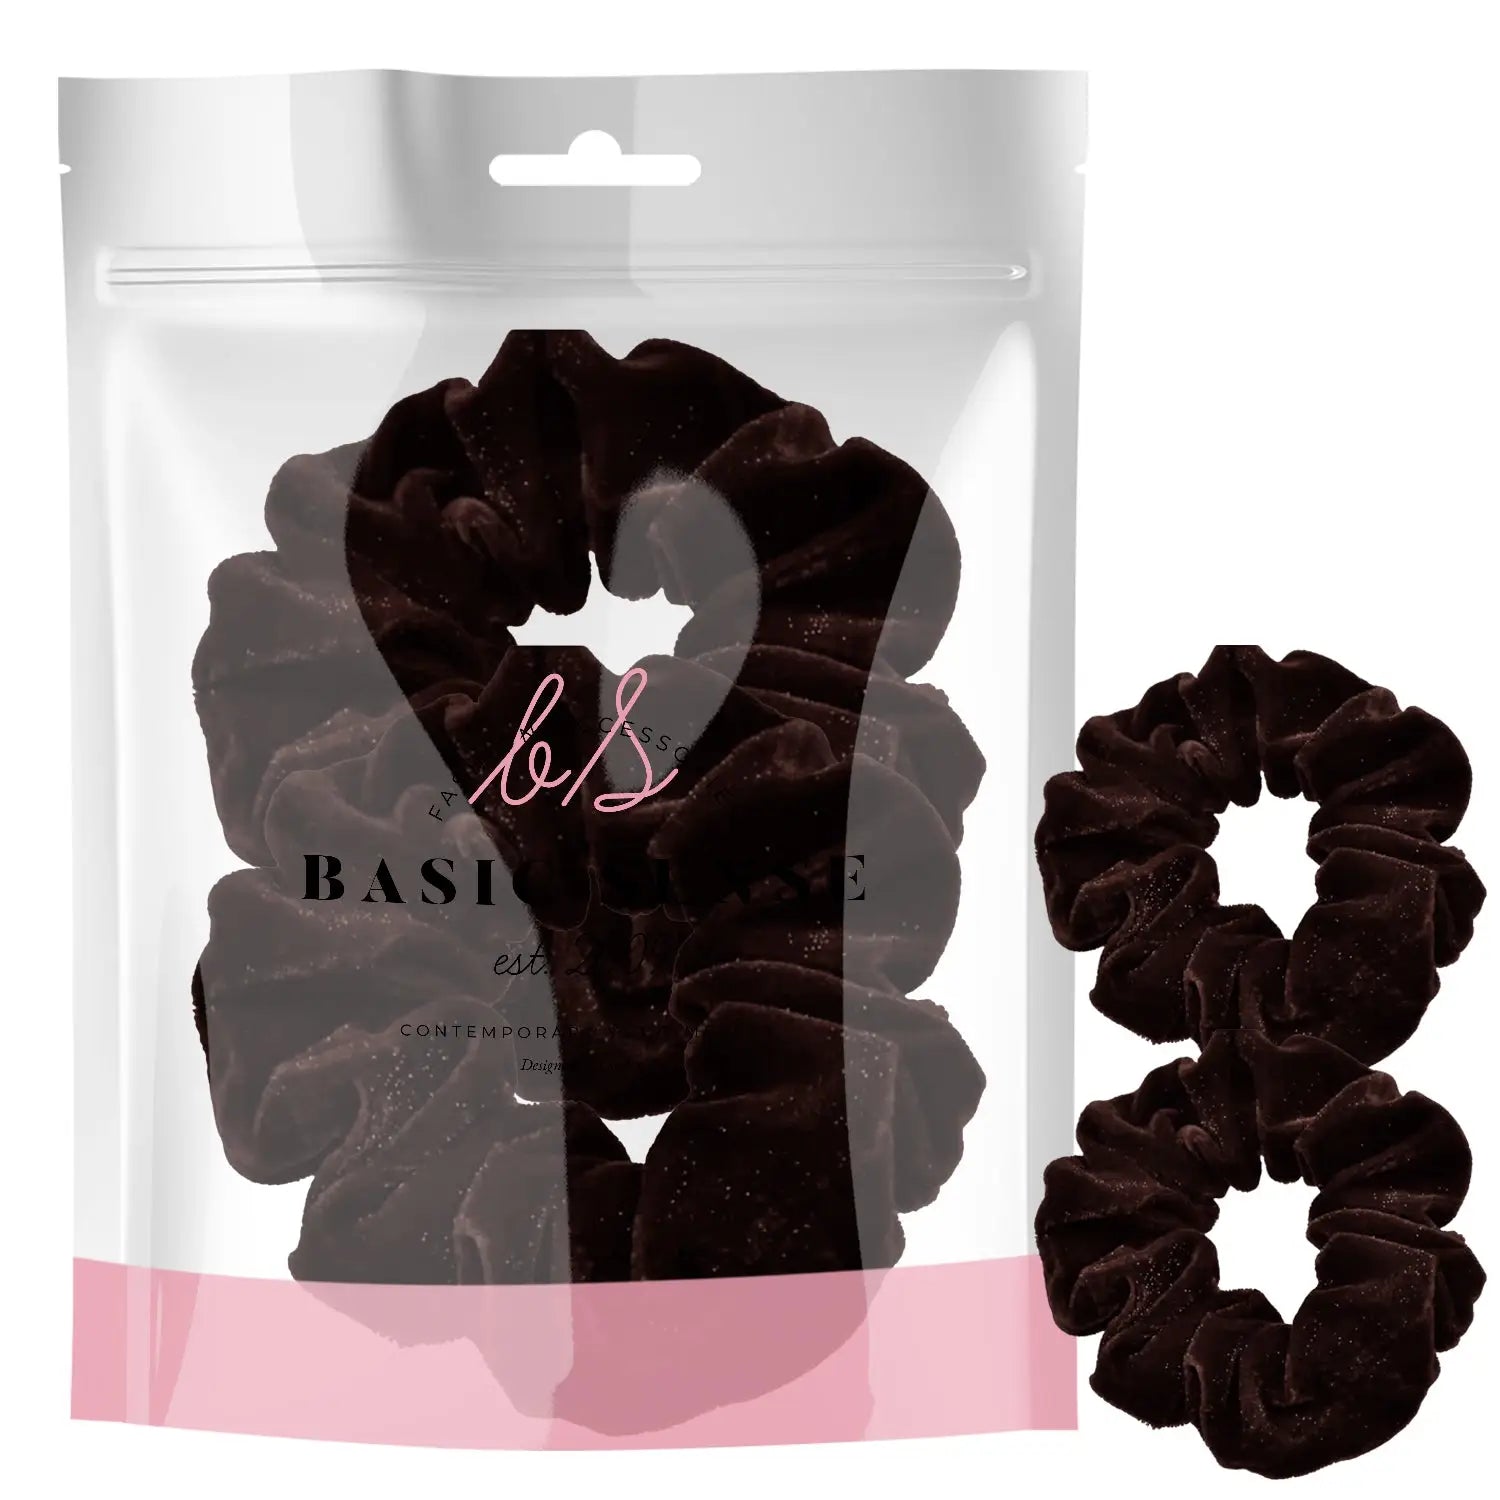 Glitter velvet hair scrunchie set with chocolate covered curls